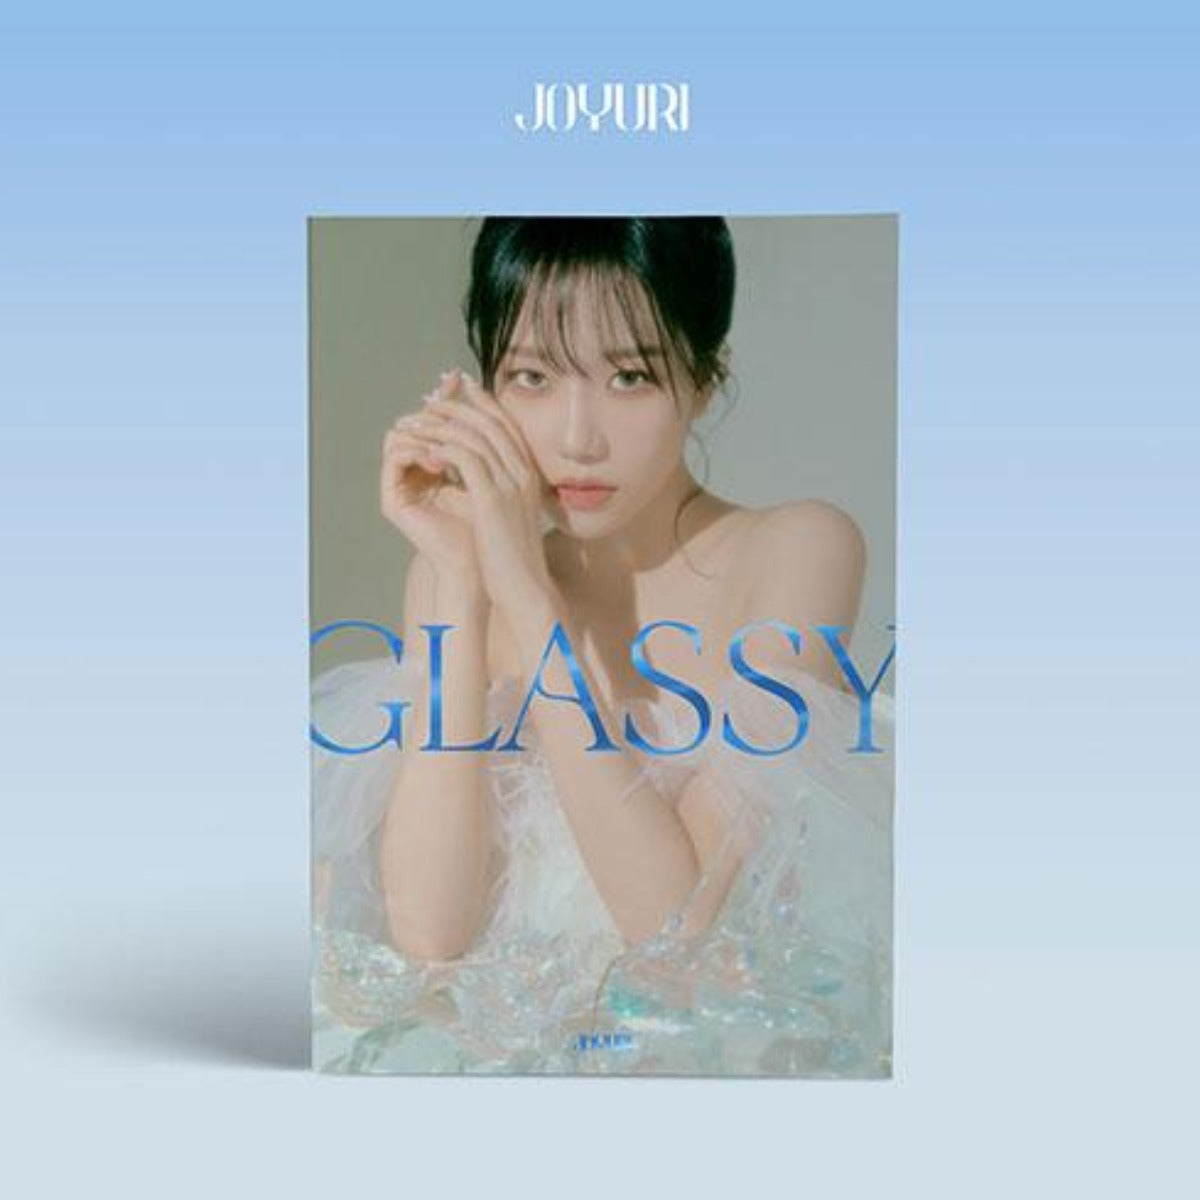 Jo Yuri Single Album - GLASSY